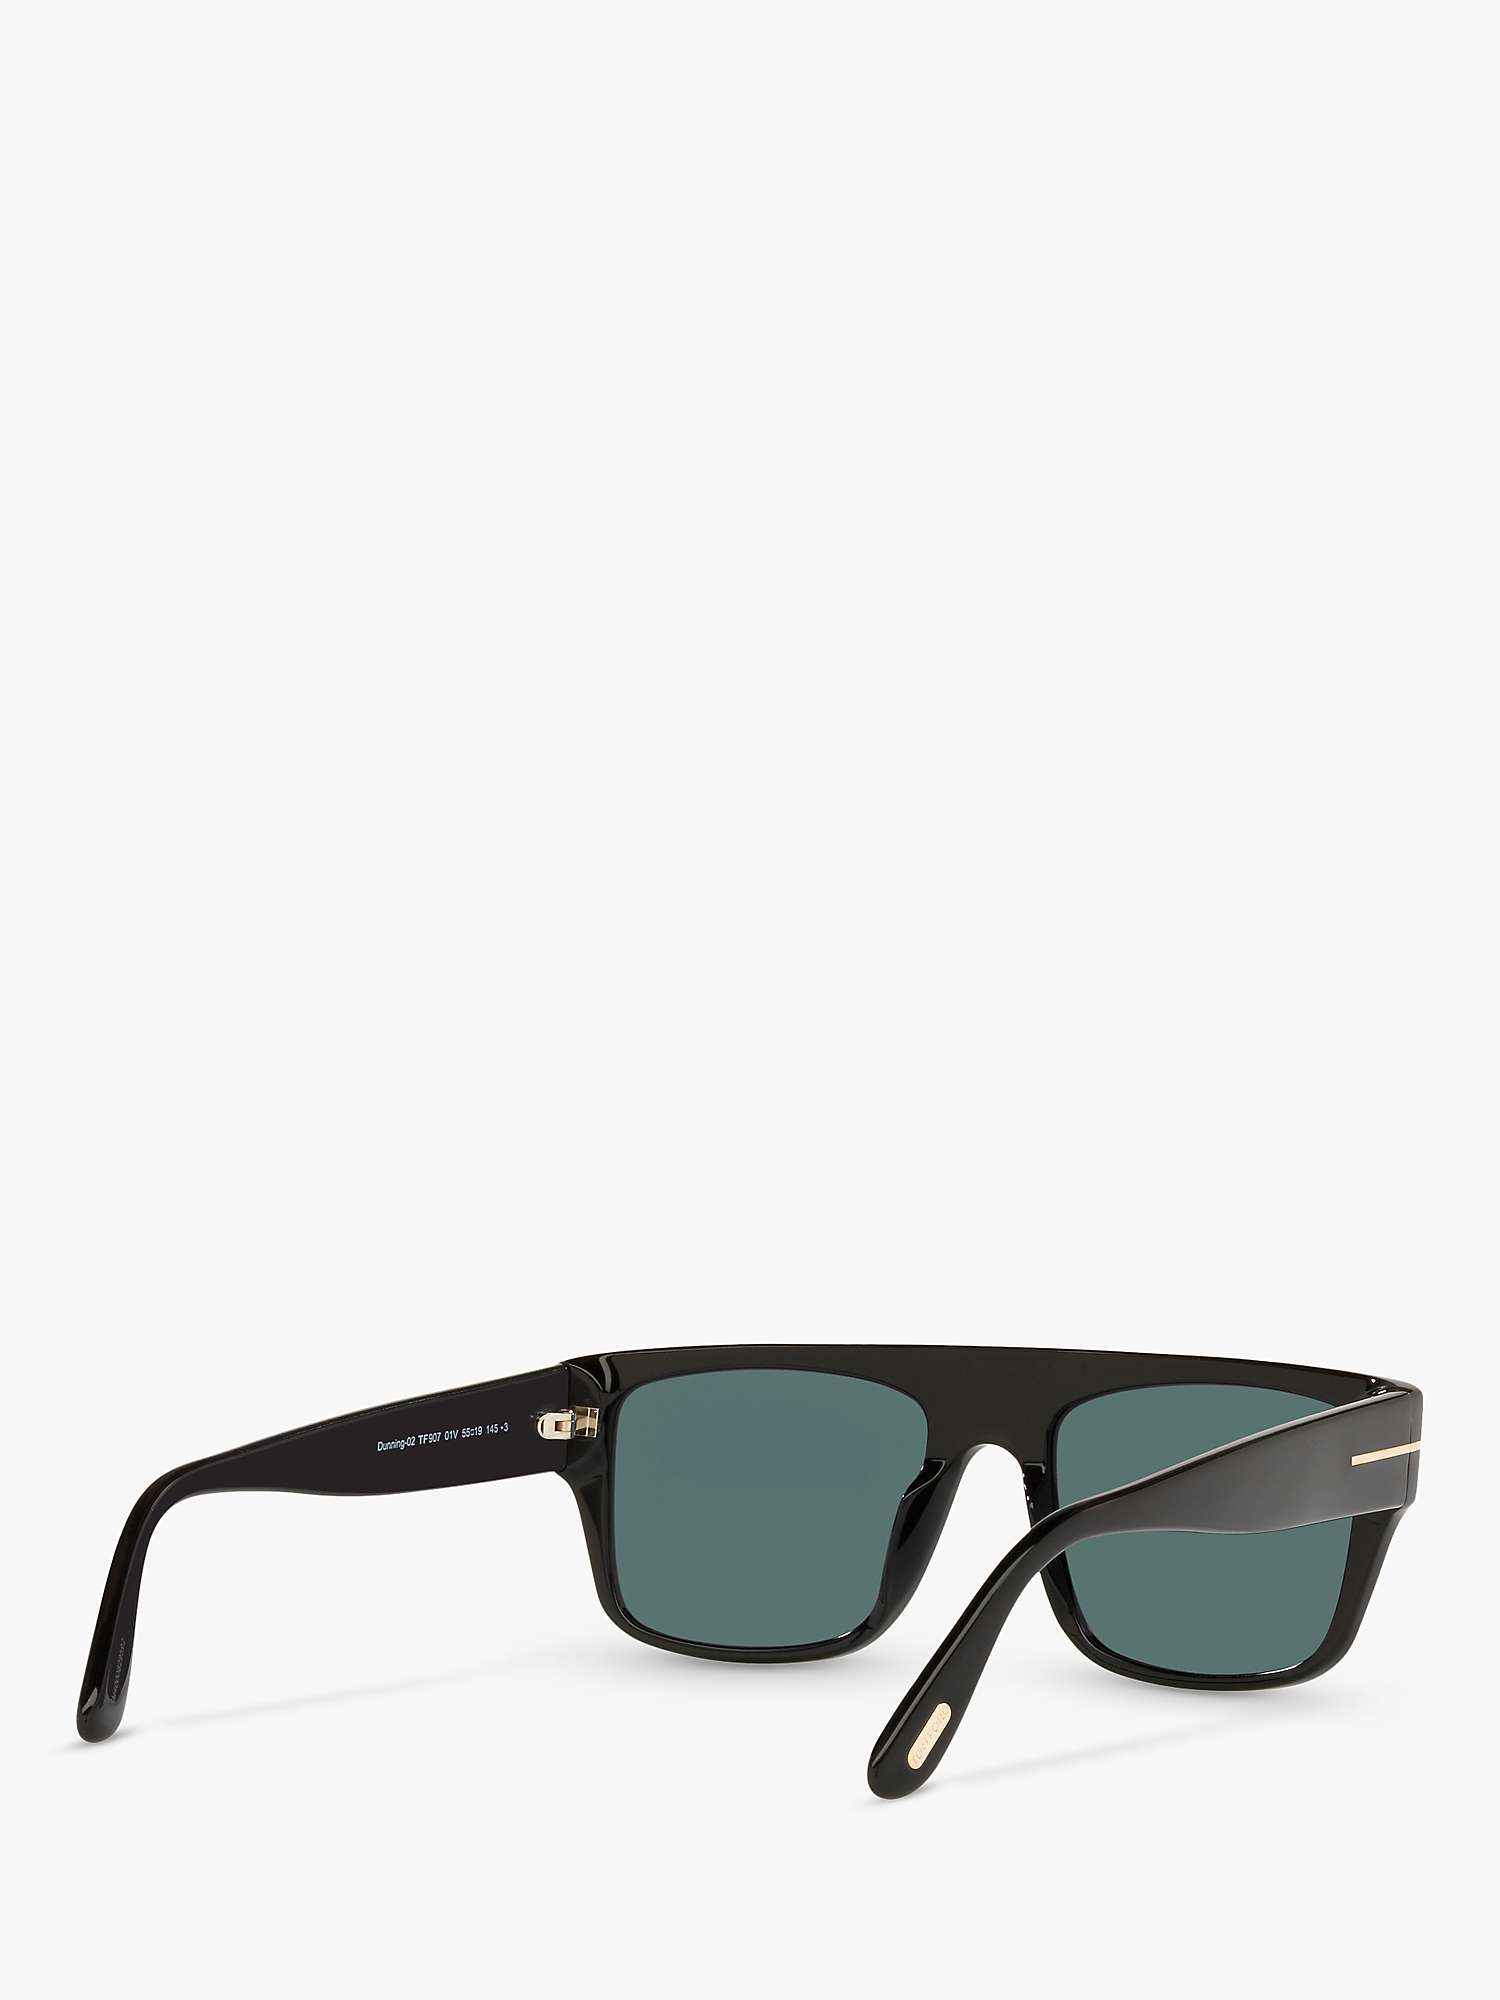 Buy TOM FORD TR001363 Men's Rectangular Sunglasses, Shiny Black/Blue Online at johnlewis.com